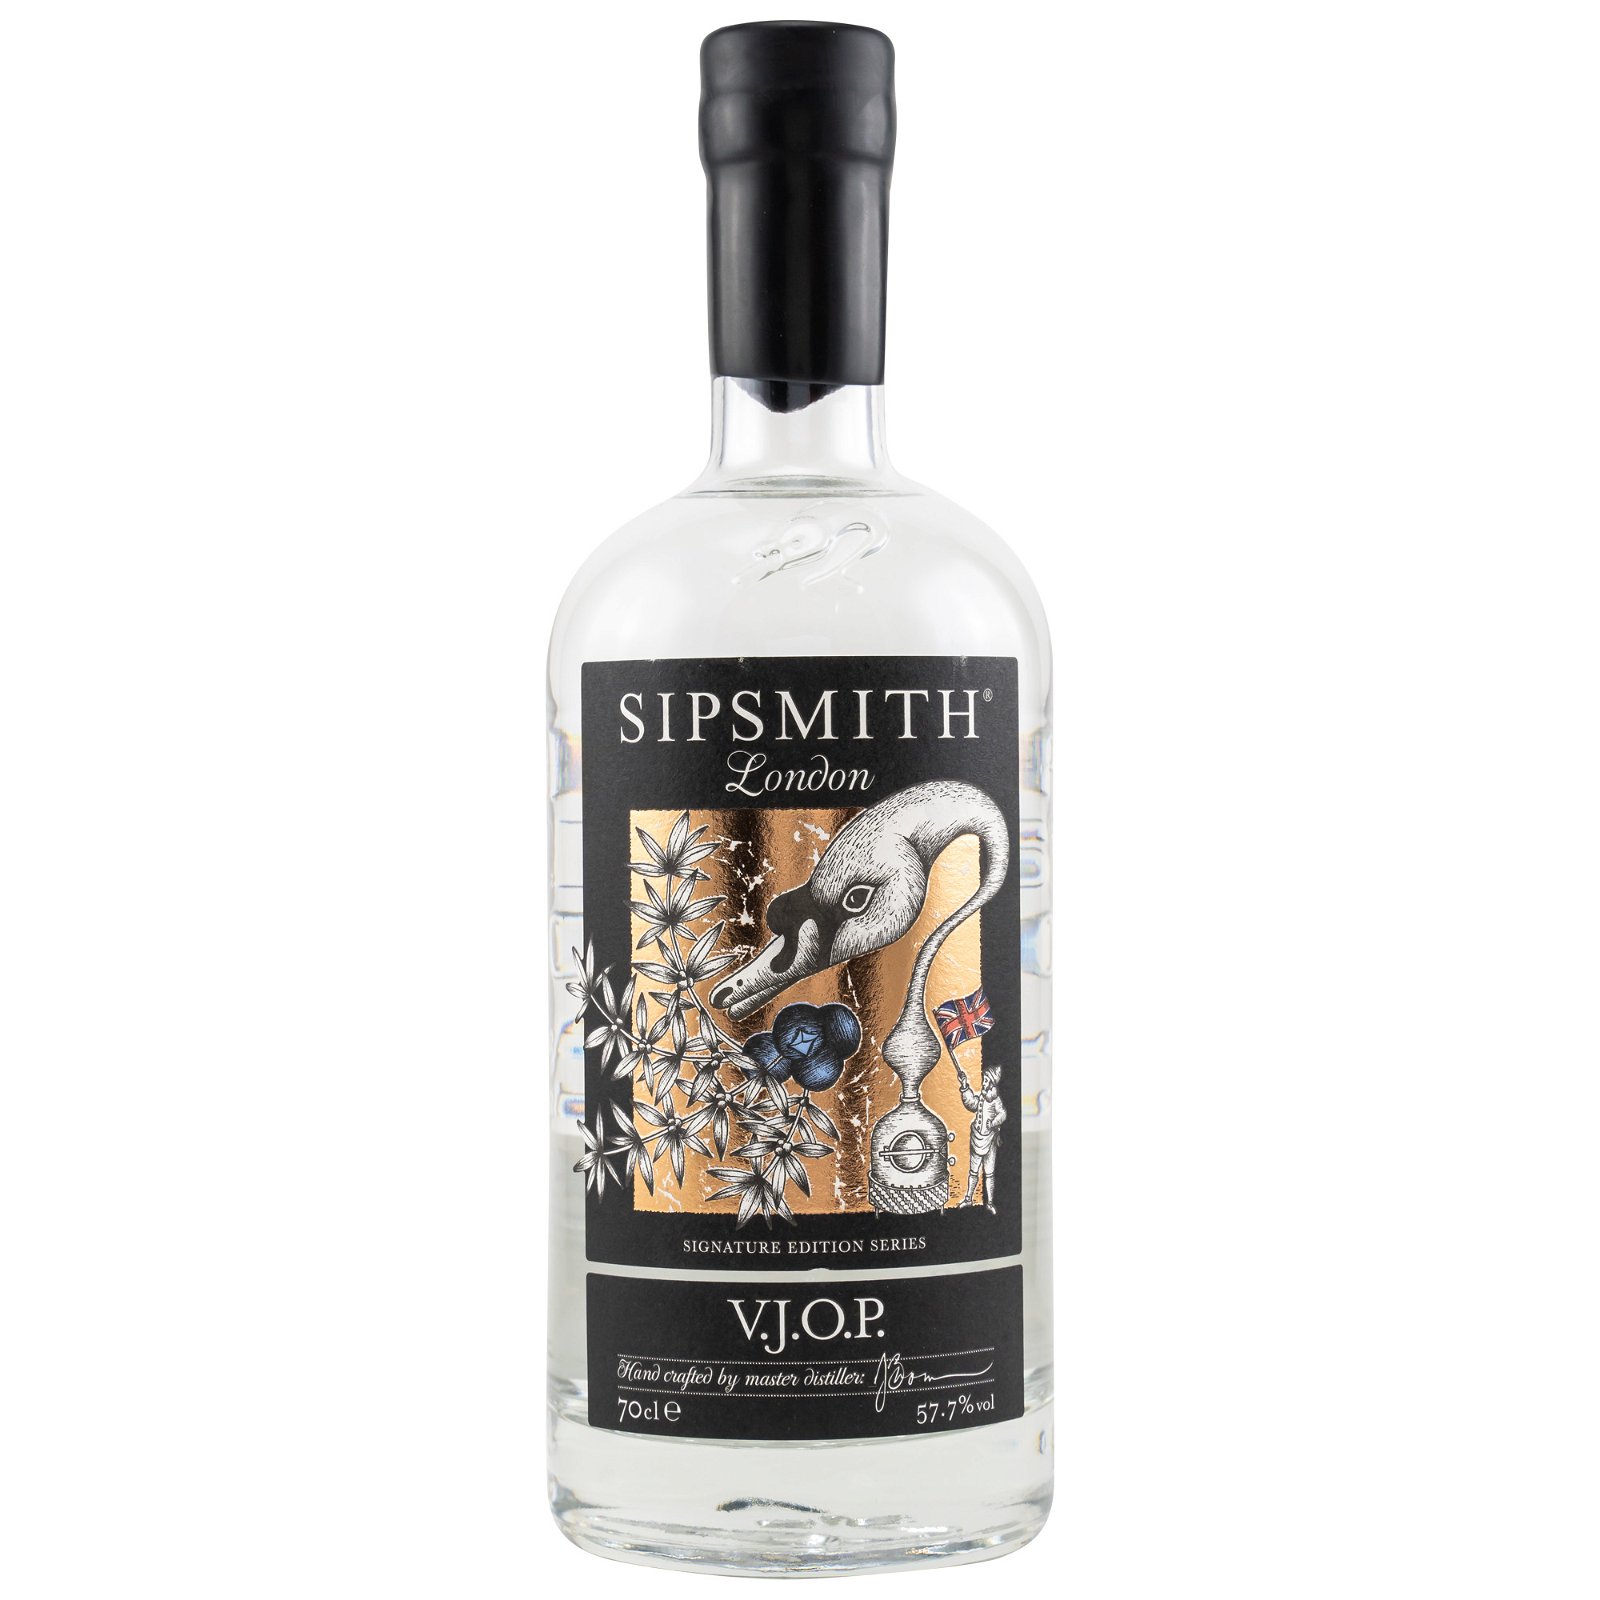 Sipsmith V.J.O.P. London Dry Gin